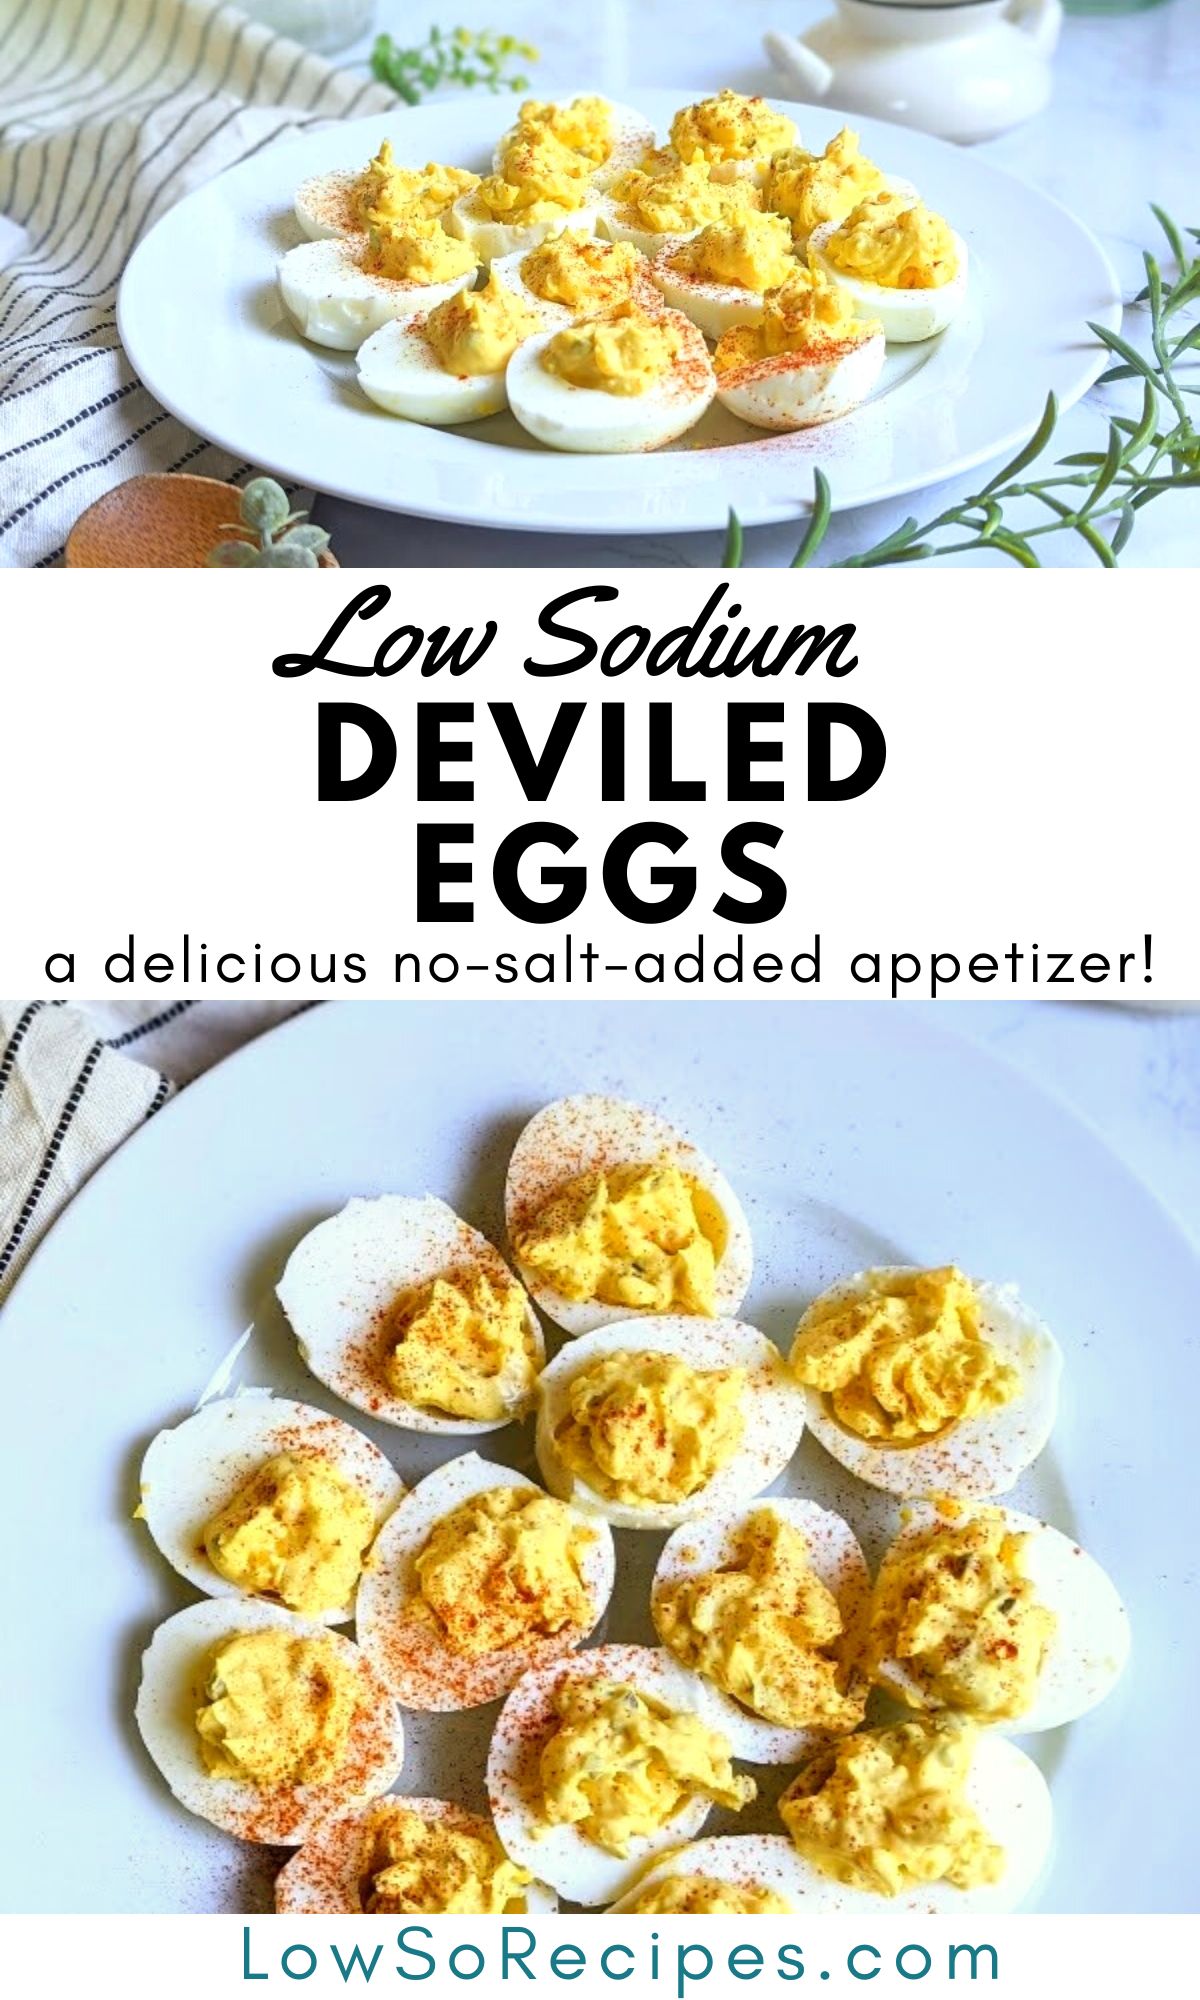 low sodium deviled eggs recipe no salt added appetizers without salt healthy egg recipes low salt